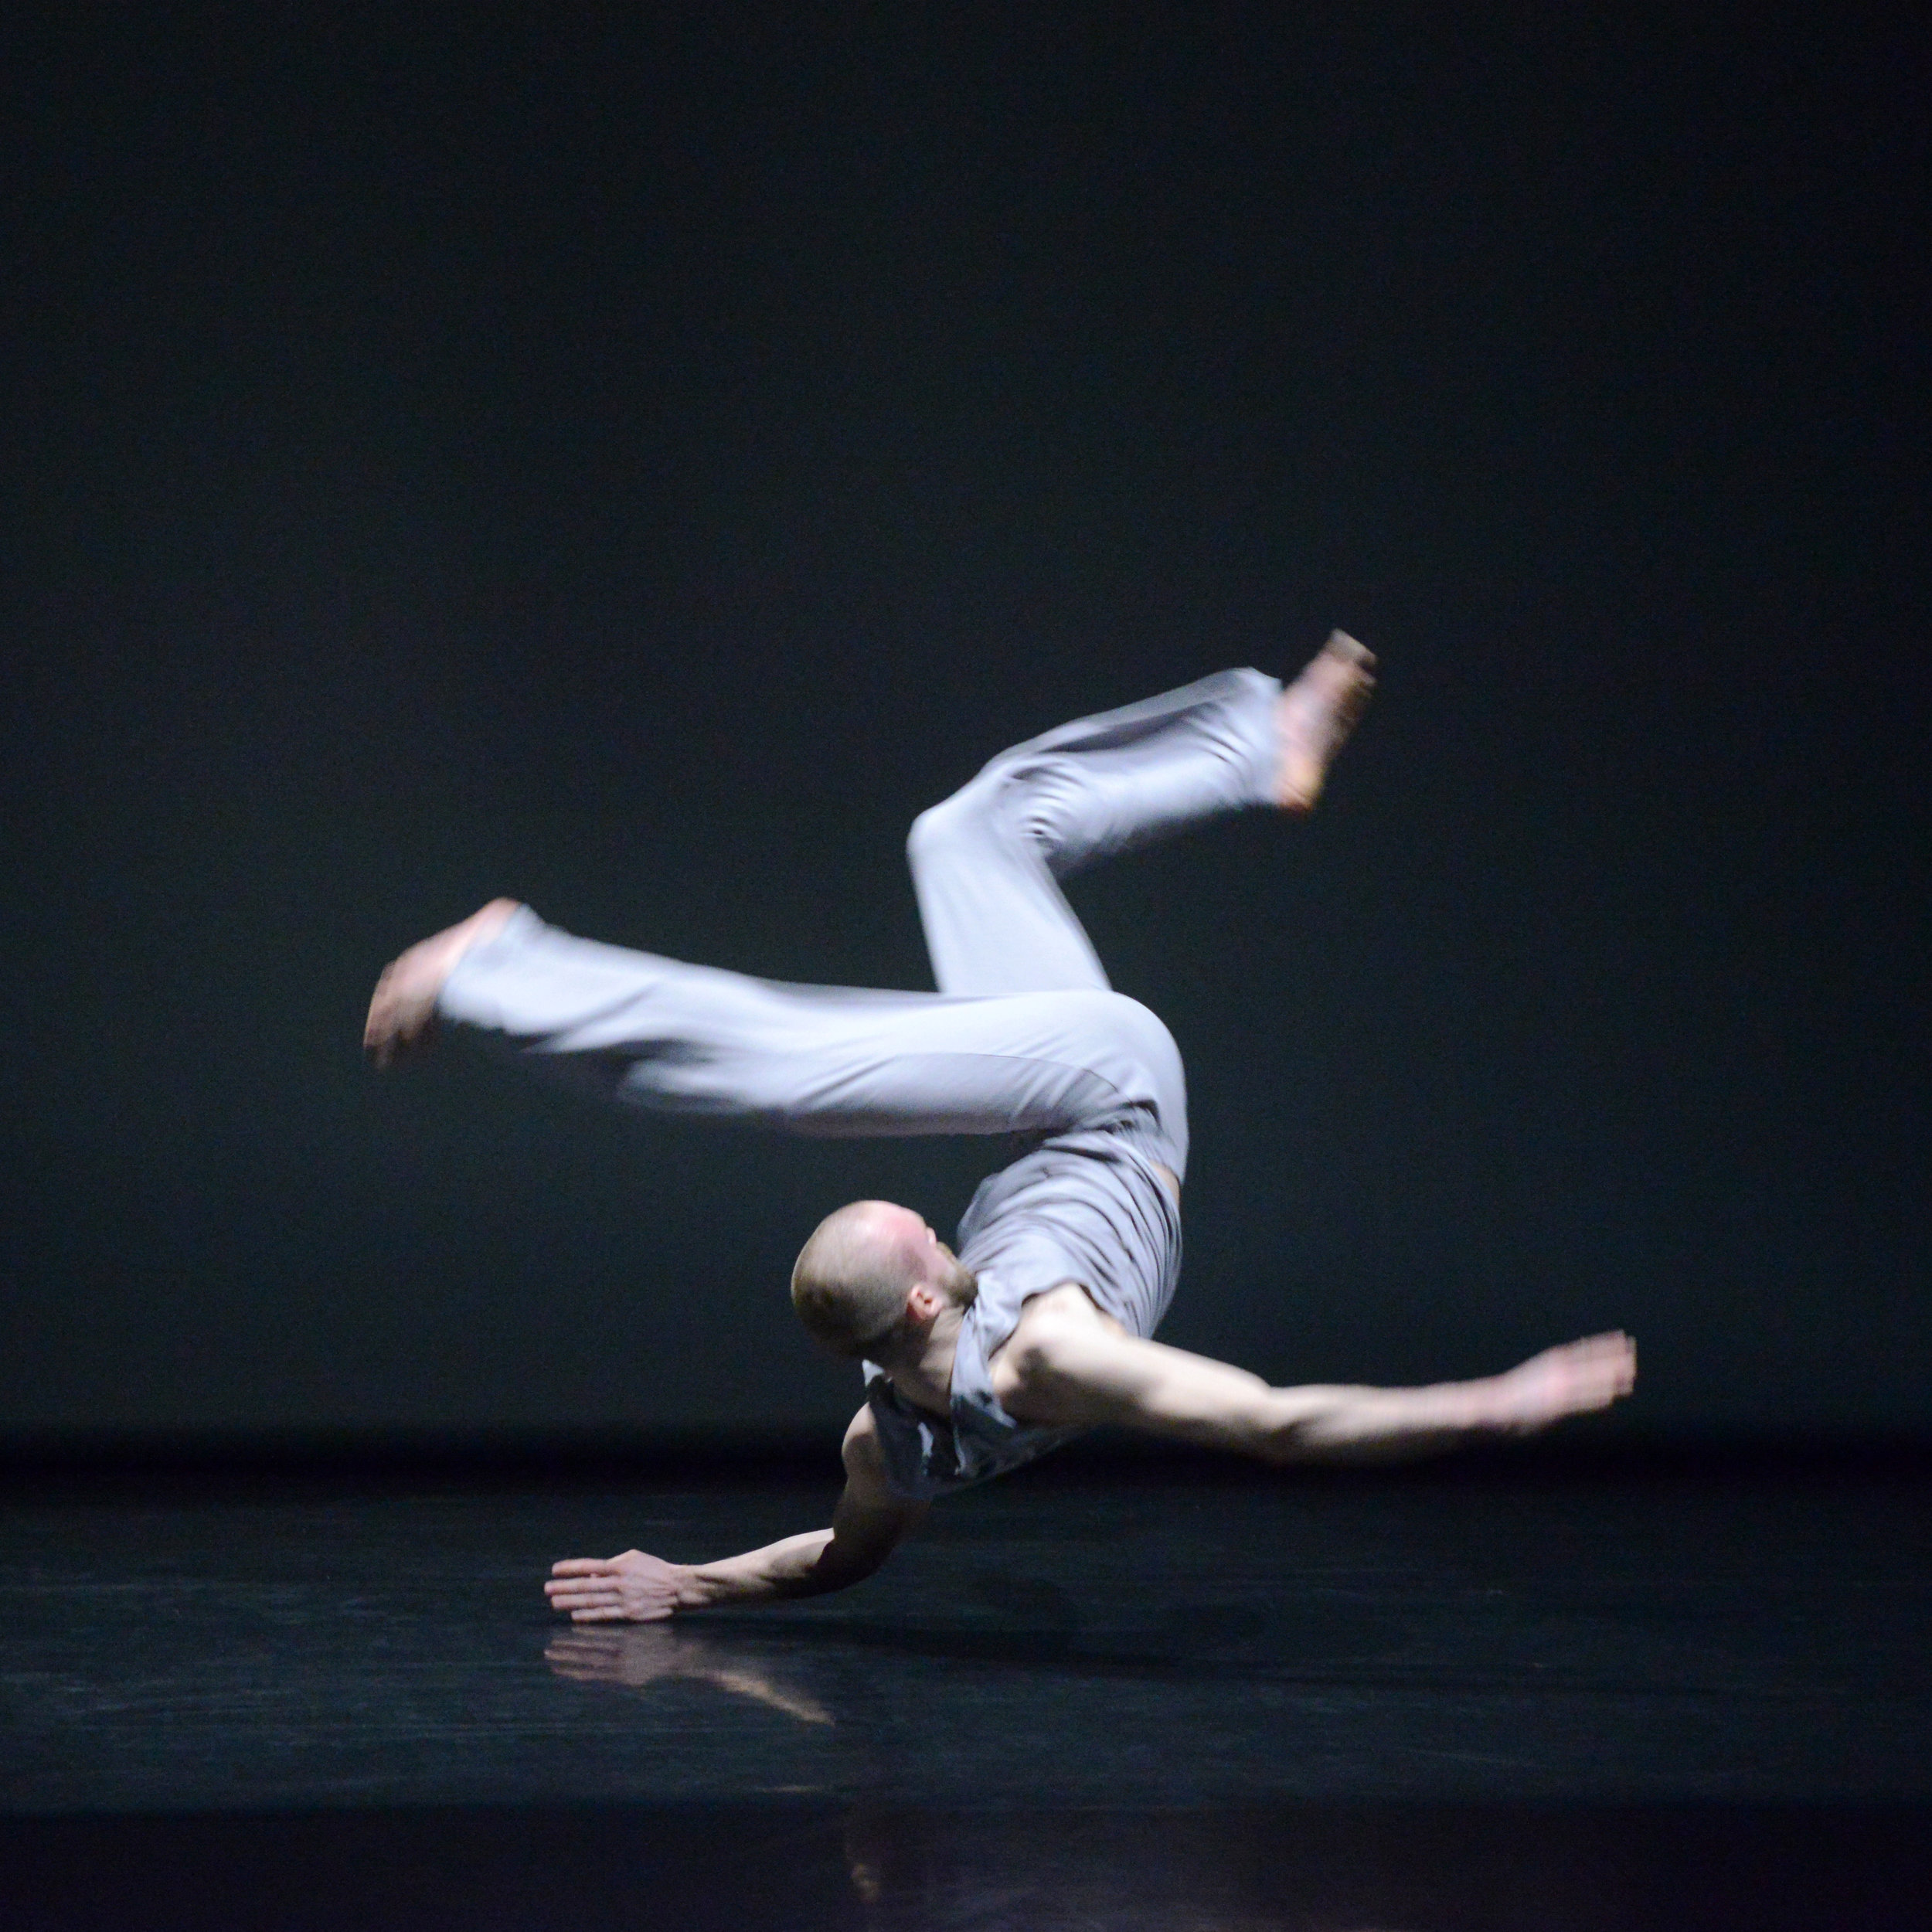  "You &amp; I"  Stephen Andrews - TORONTO DANCE THEATRE  Photo by Guntar Kravis 